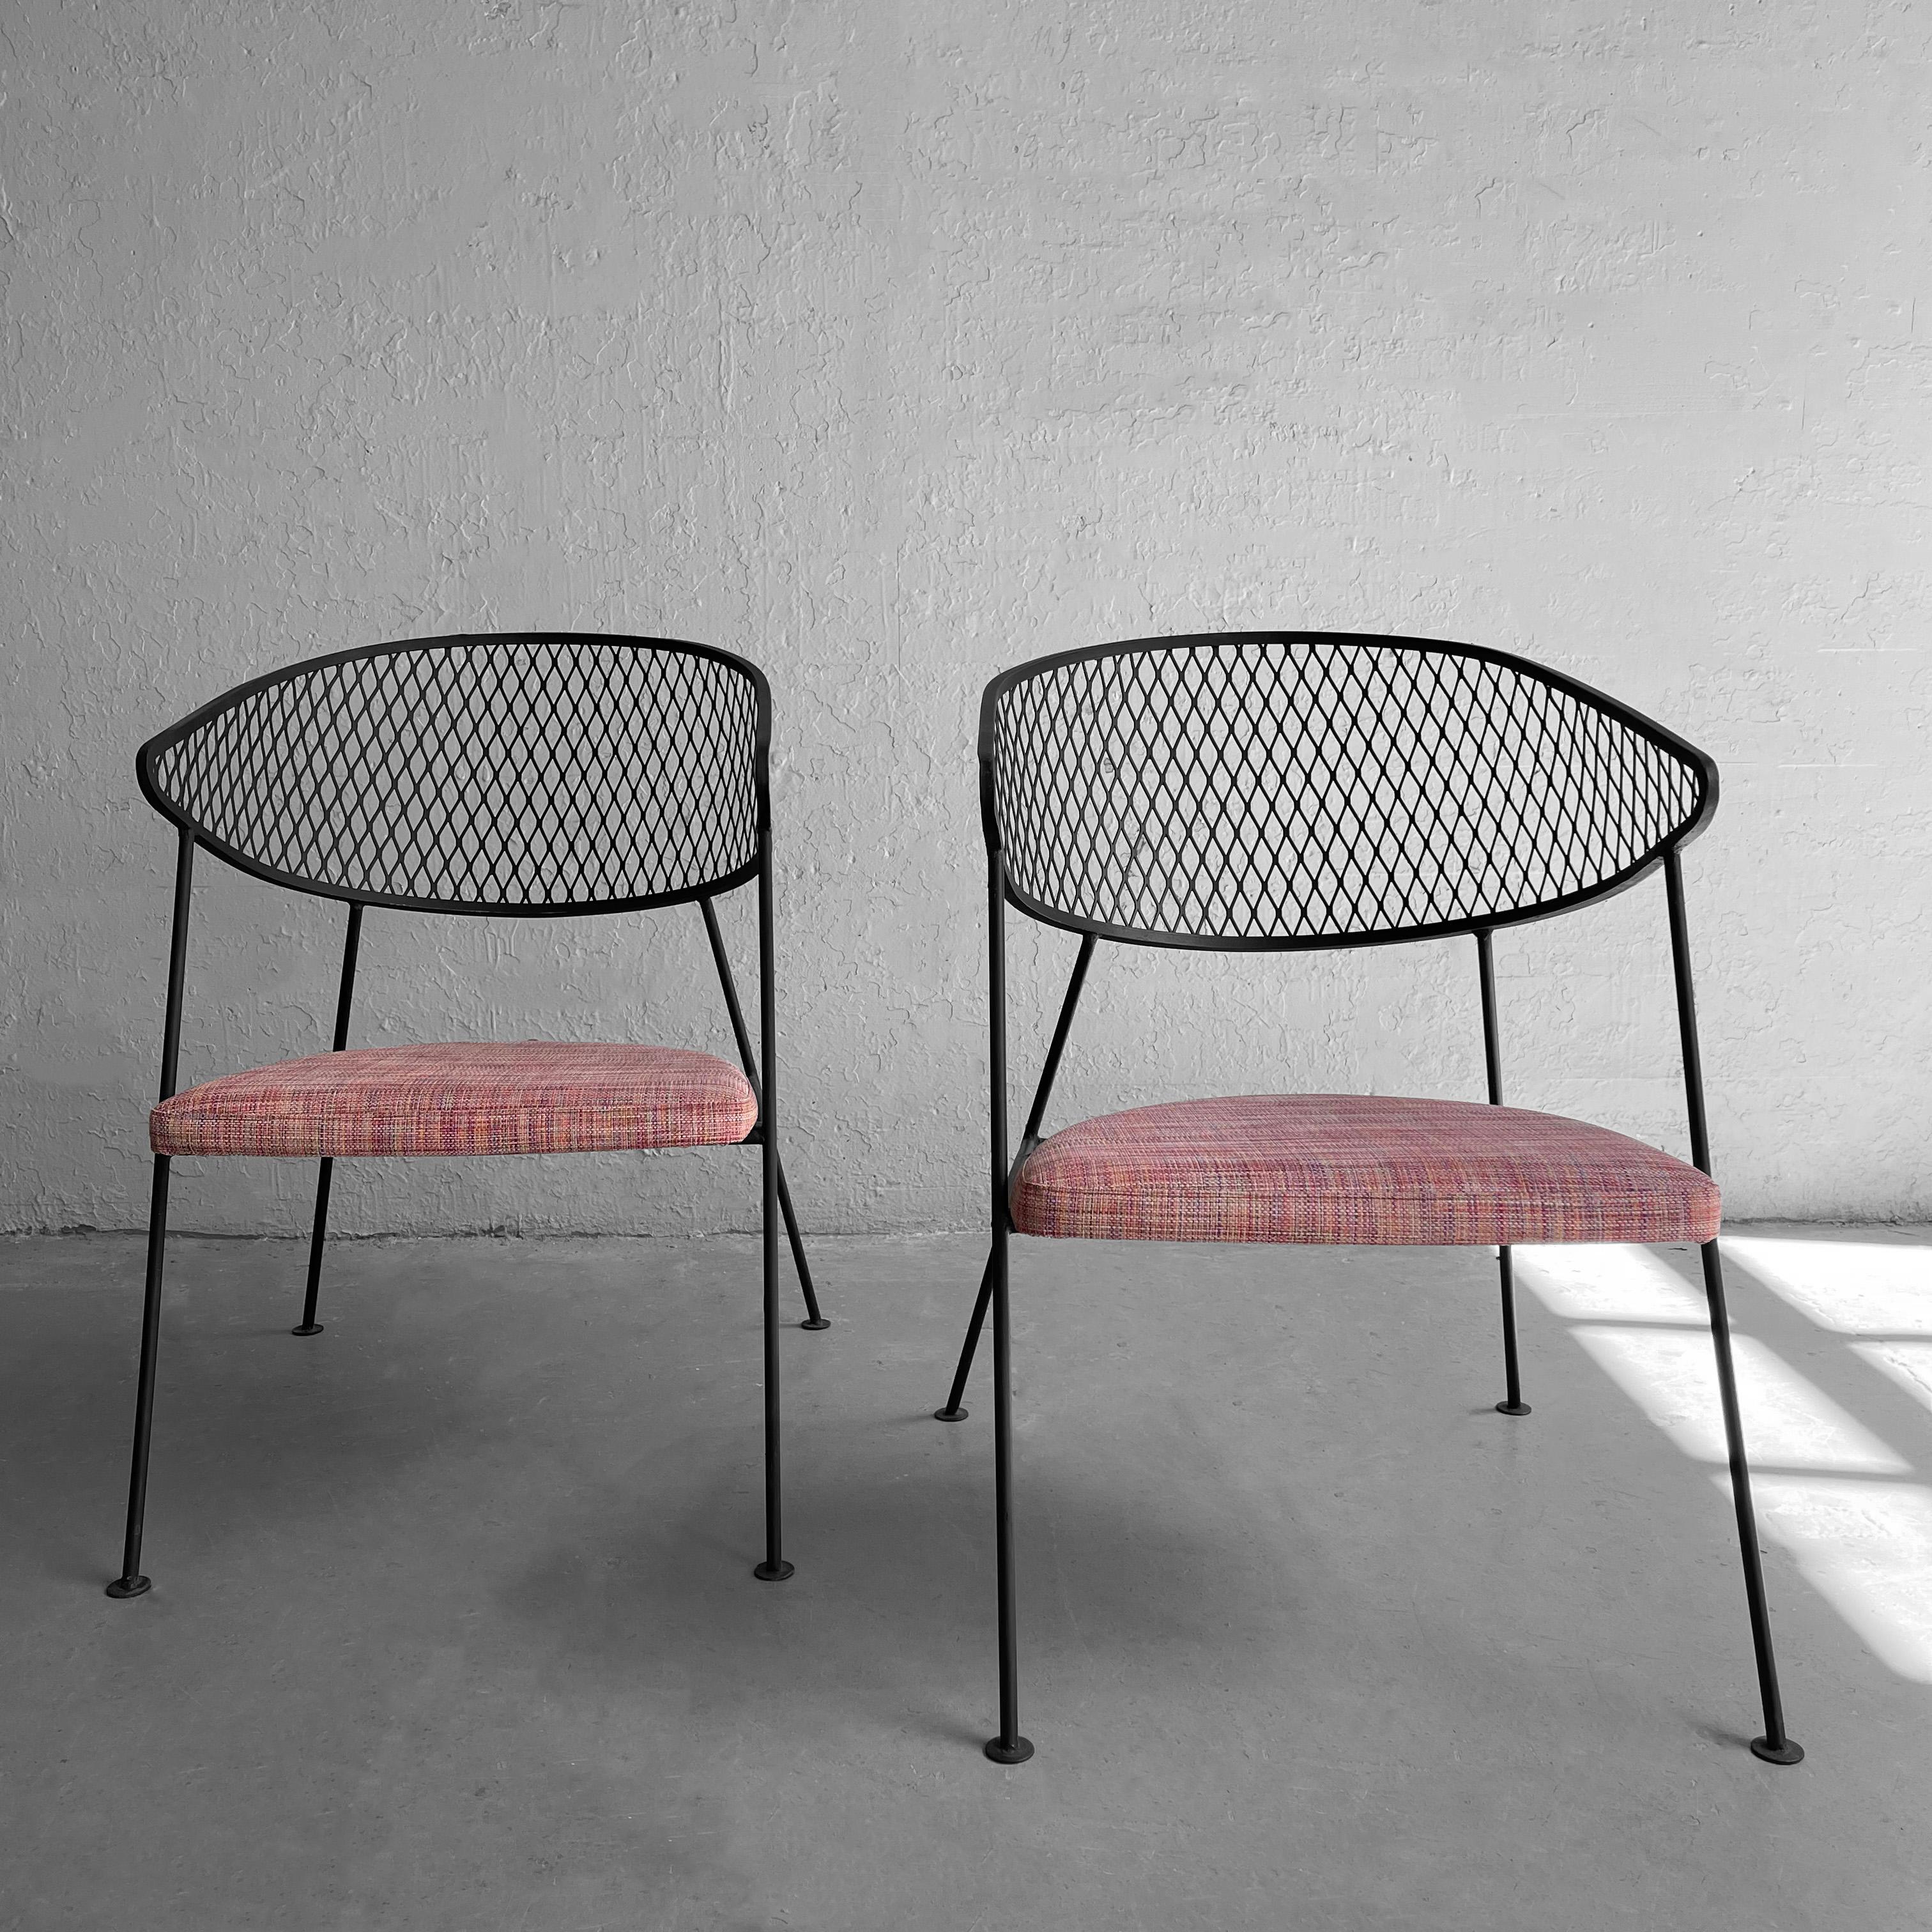 20th Century Wrought Iron Patio Chairs By Maurizio Tempestini For Salterini